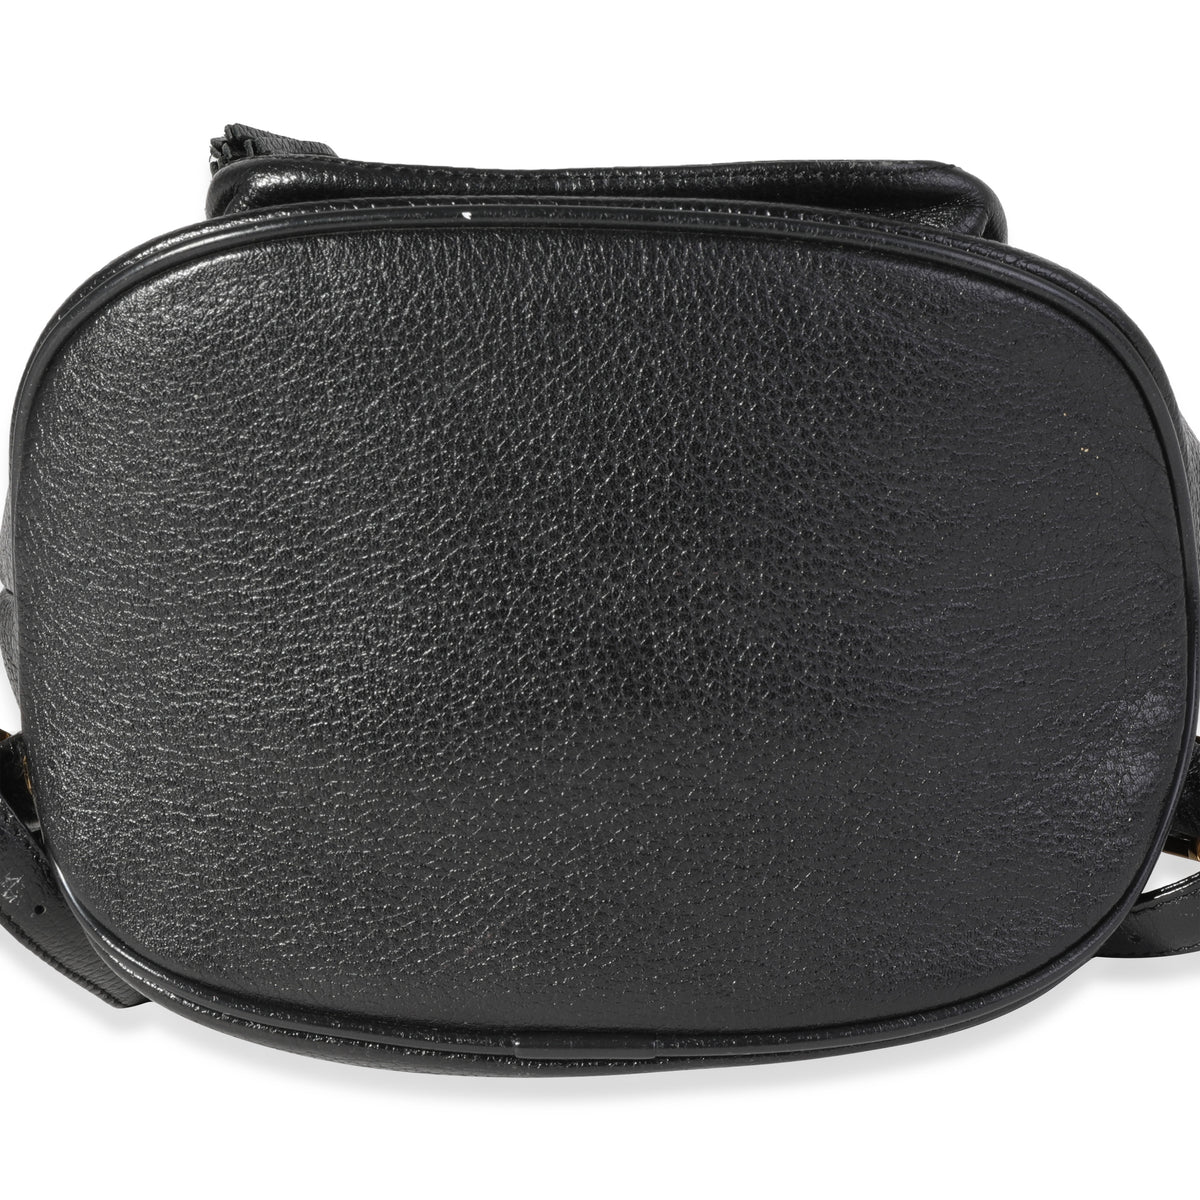 Vintage Leather Women Backpack, School Backpack, Designer Handbags AK1 –  ROCKCOWLEATHERSTUDIO